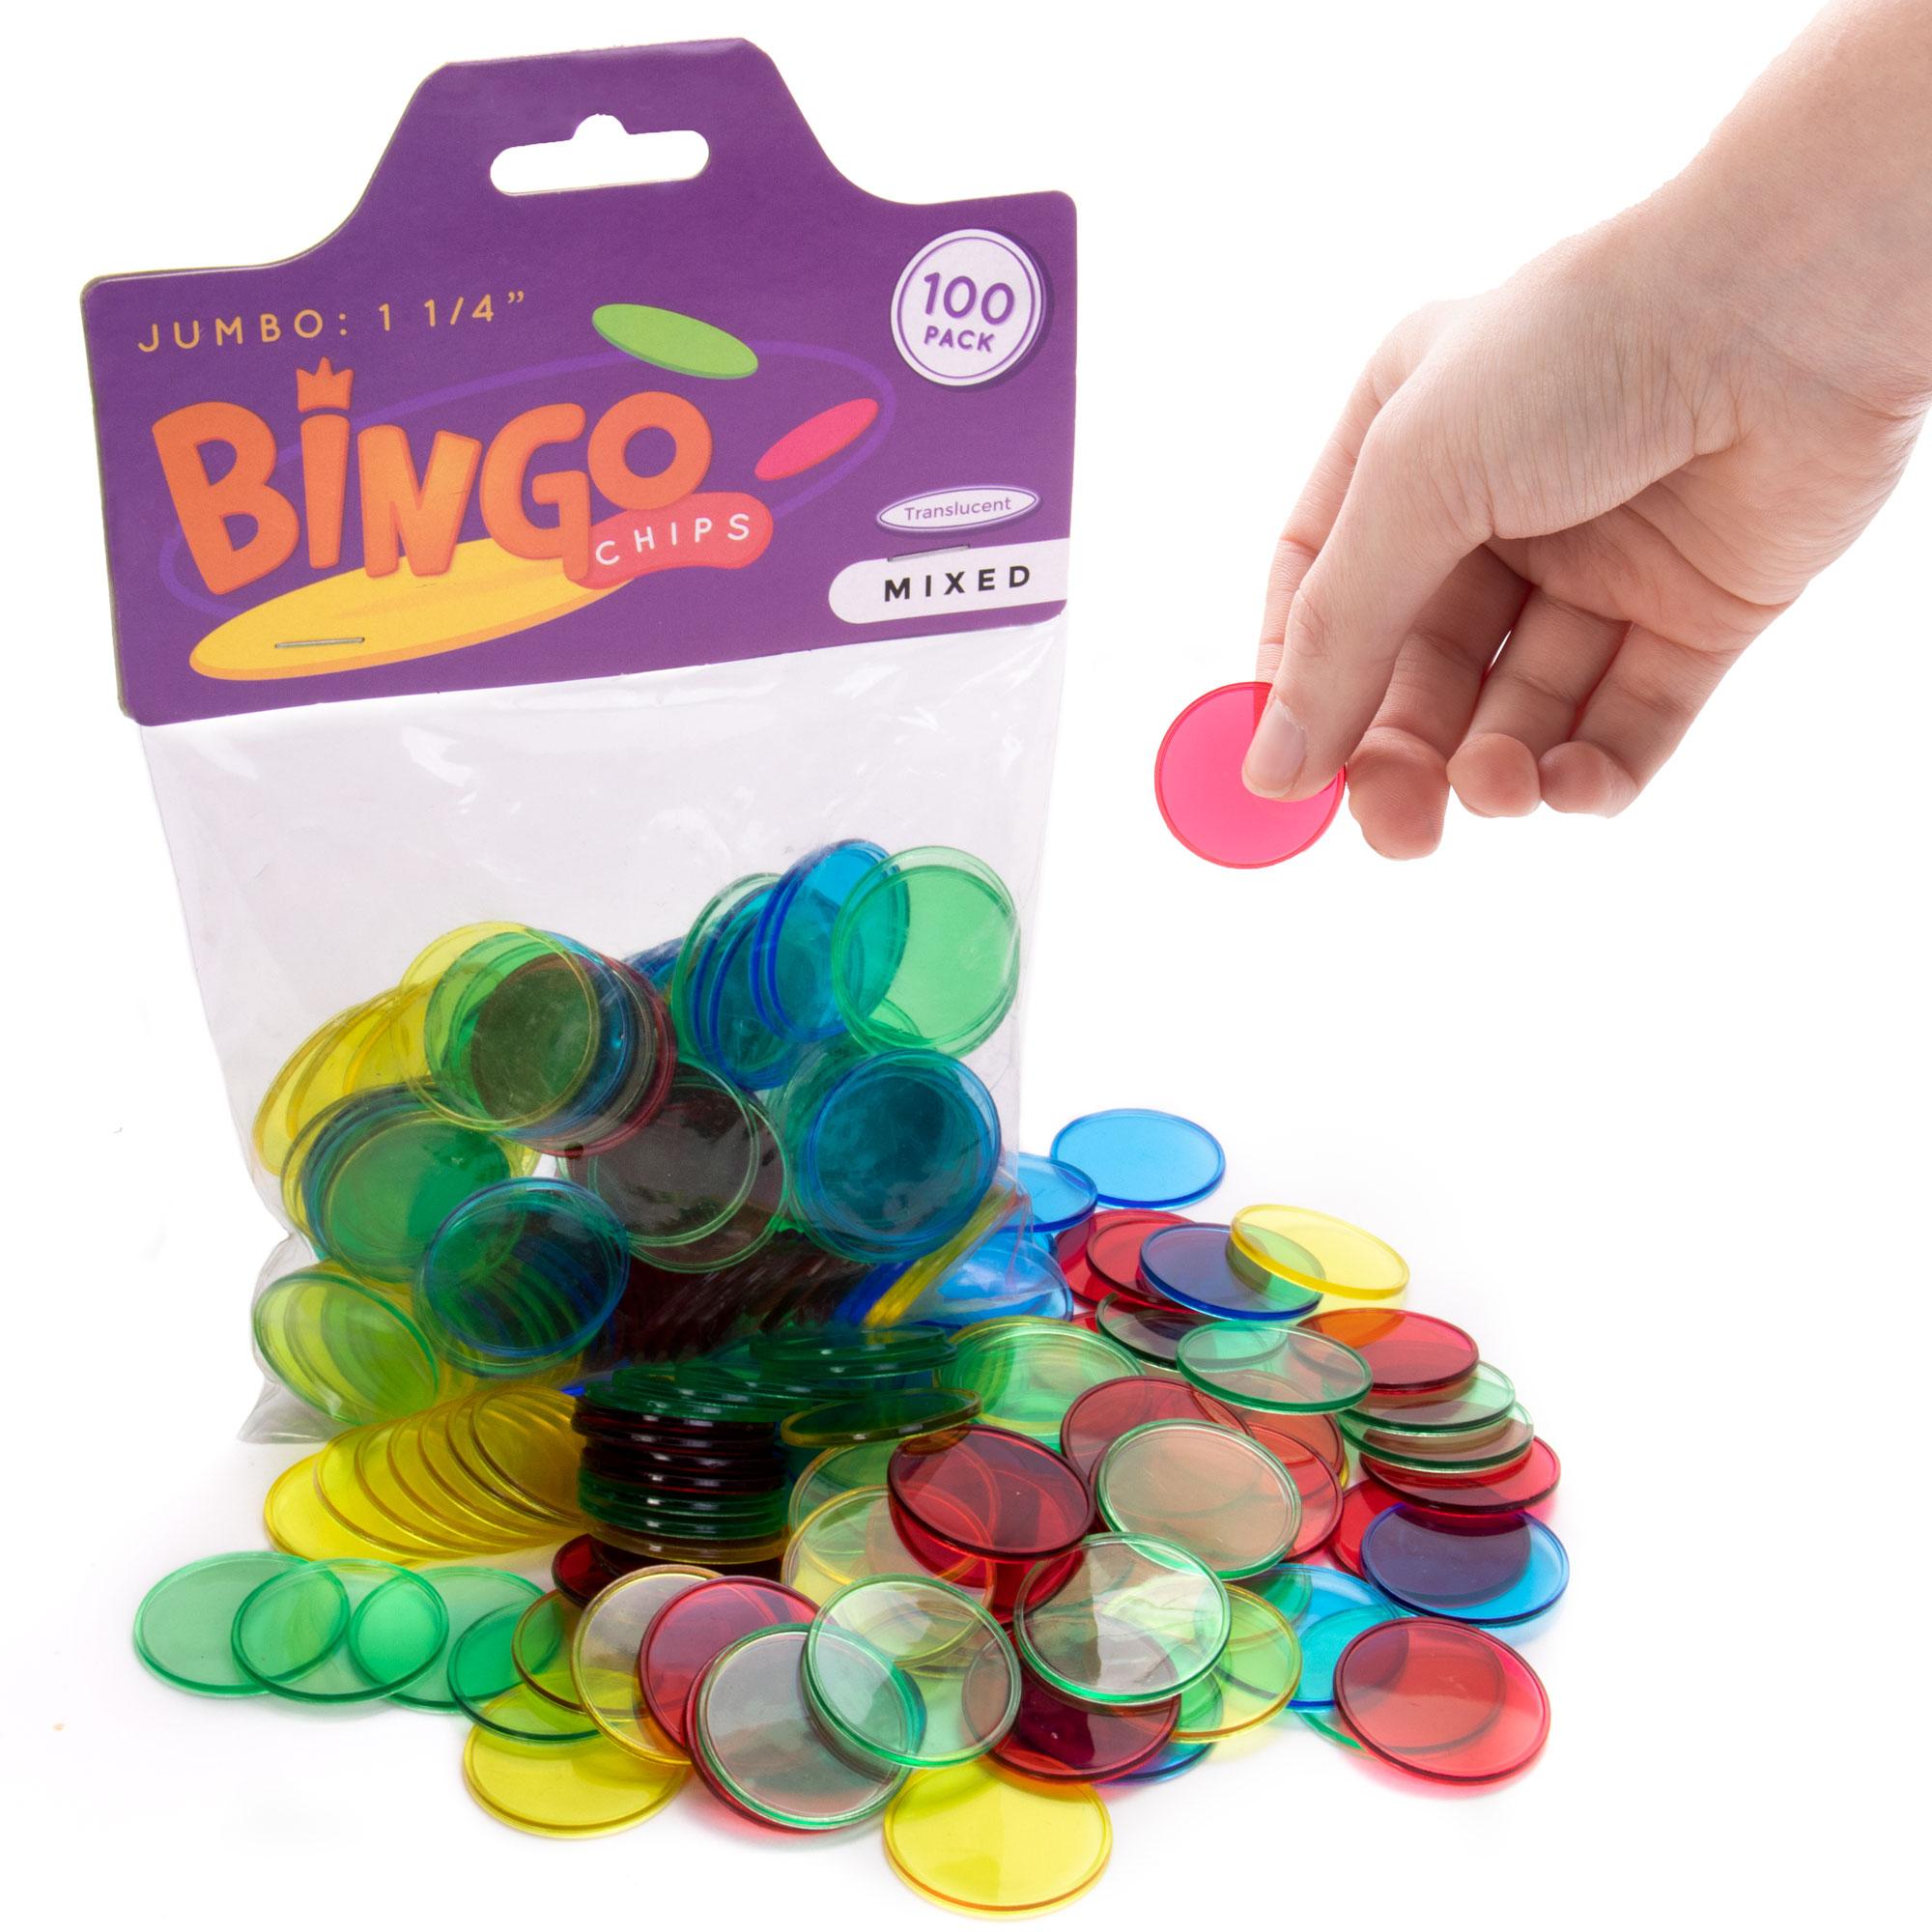 Jumbo 1.25-inch Translucent Bingo Chips (100-pack, Mixed)